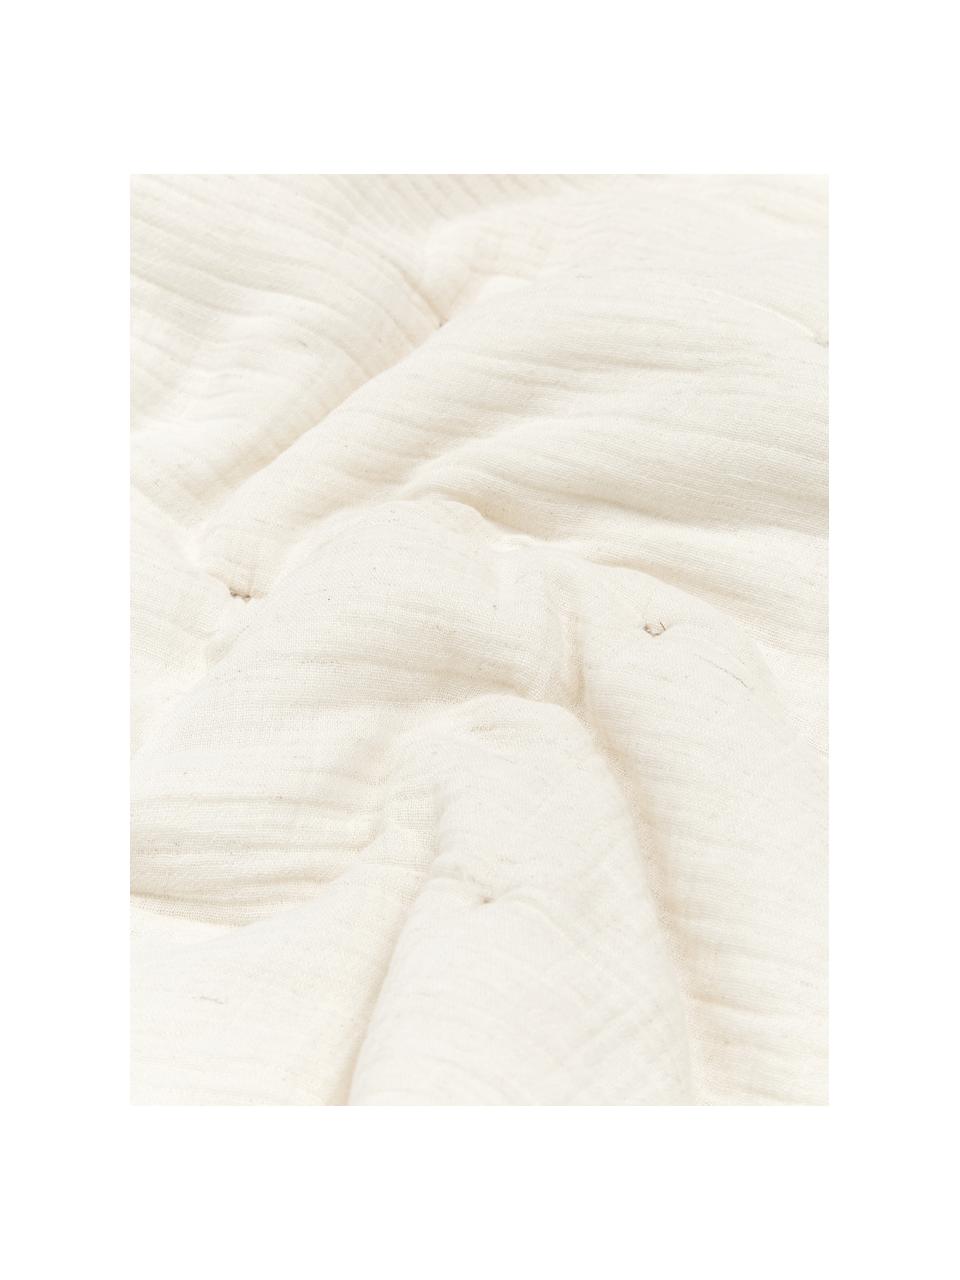 Colcha acolchada de algodón Lune, Funda: 100% algodón, Beige, An 180 x L 250 cm (para camas de 140 x 200 cm)